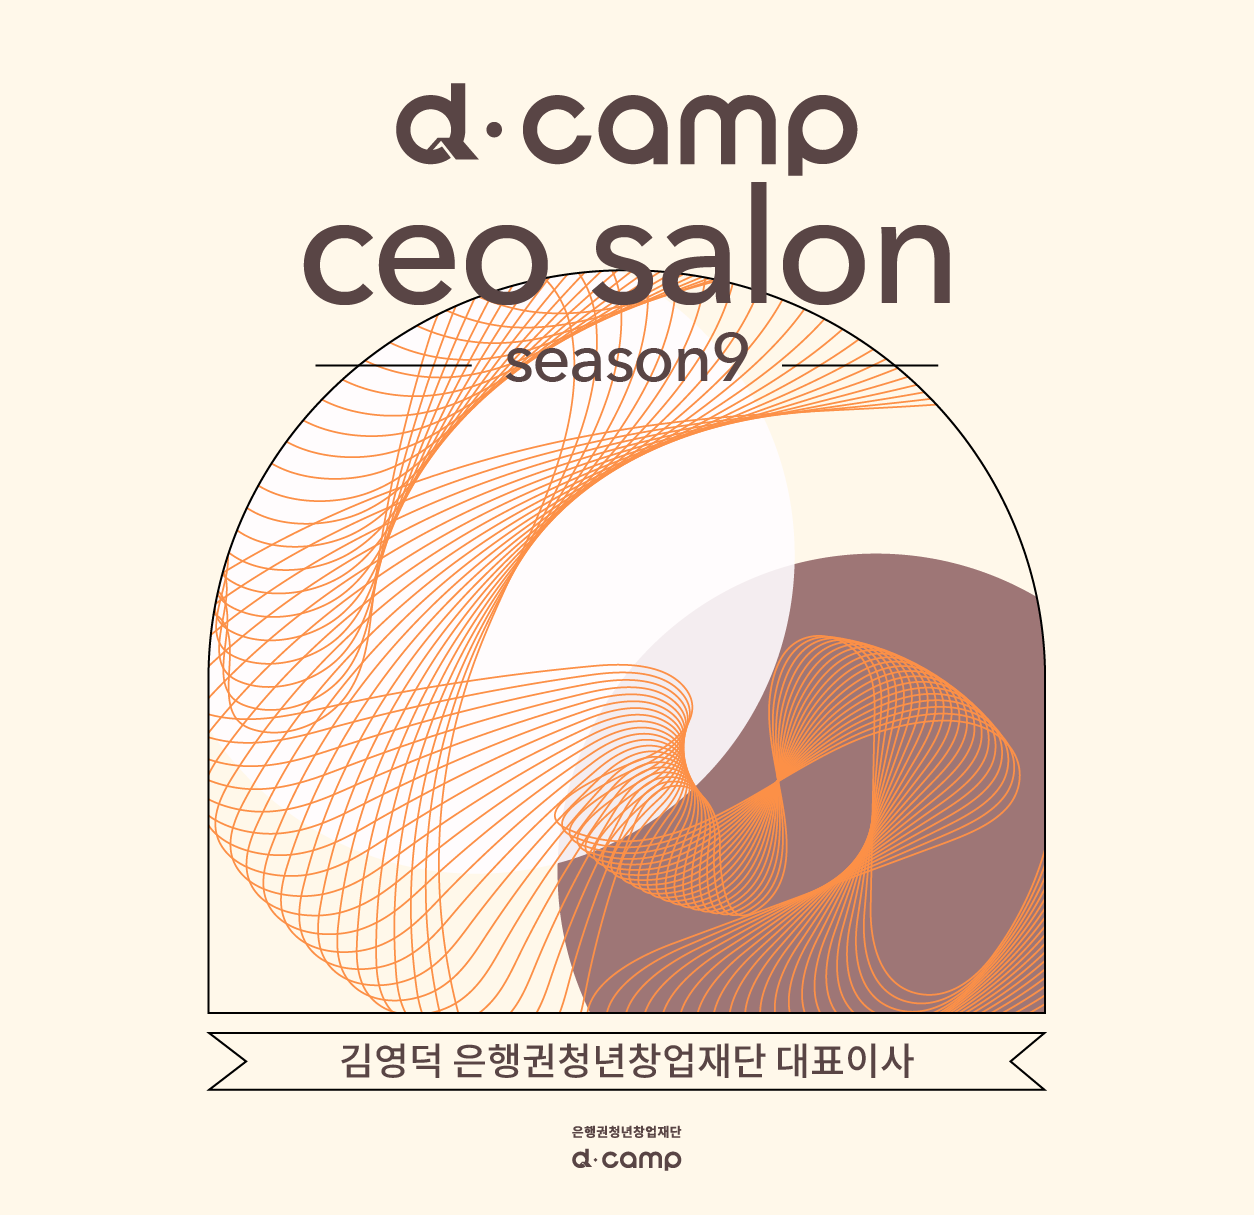 d·camp CEO salon season9 w. 디캠프 김영덕 대표이사 의 웹포스터